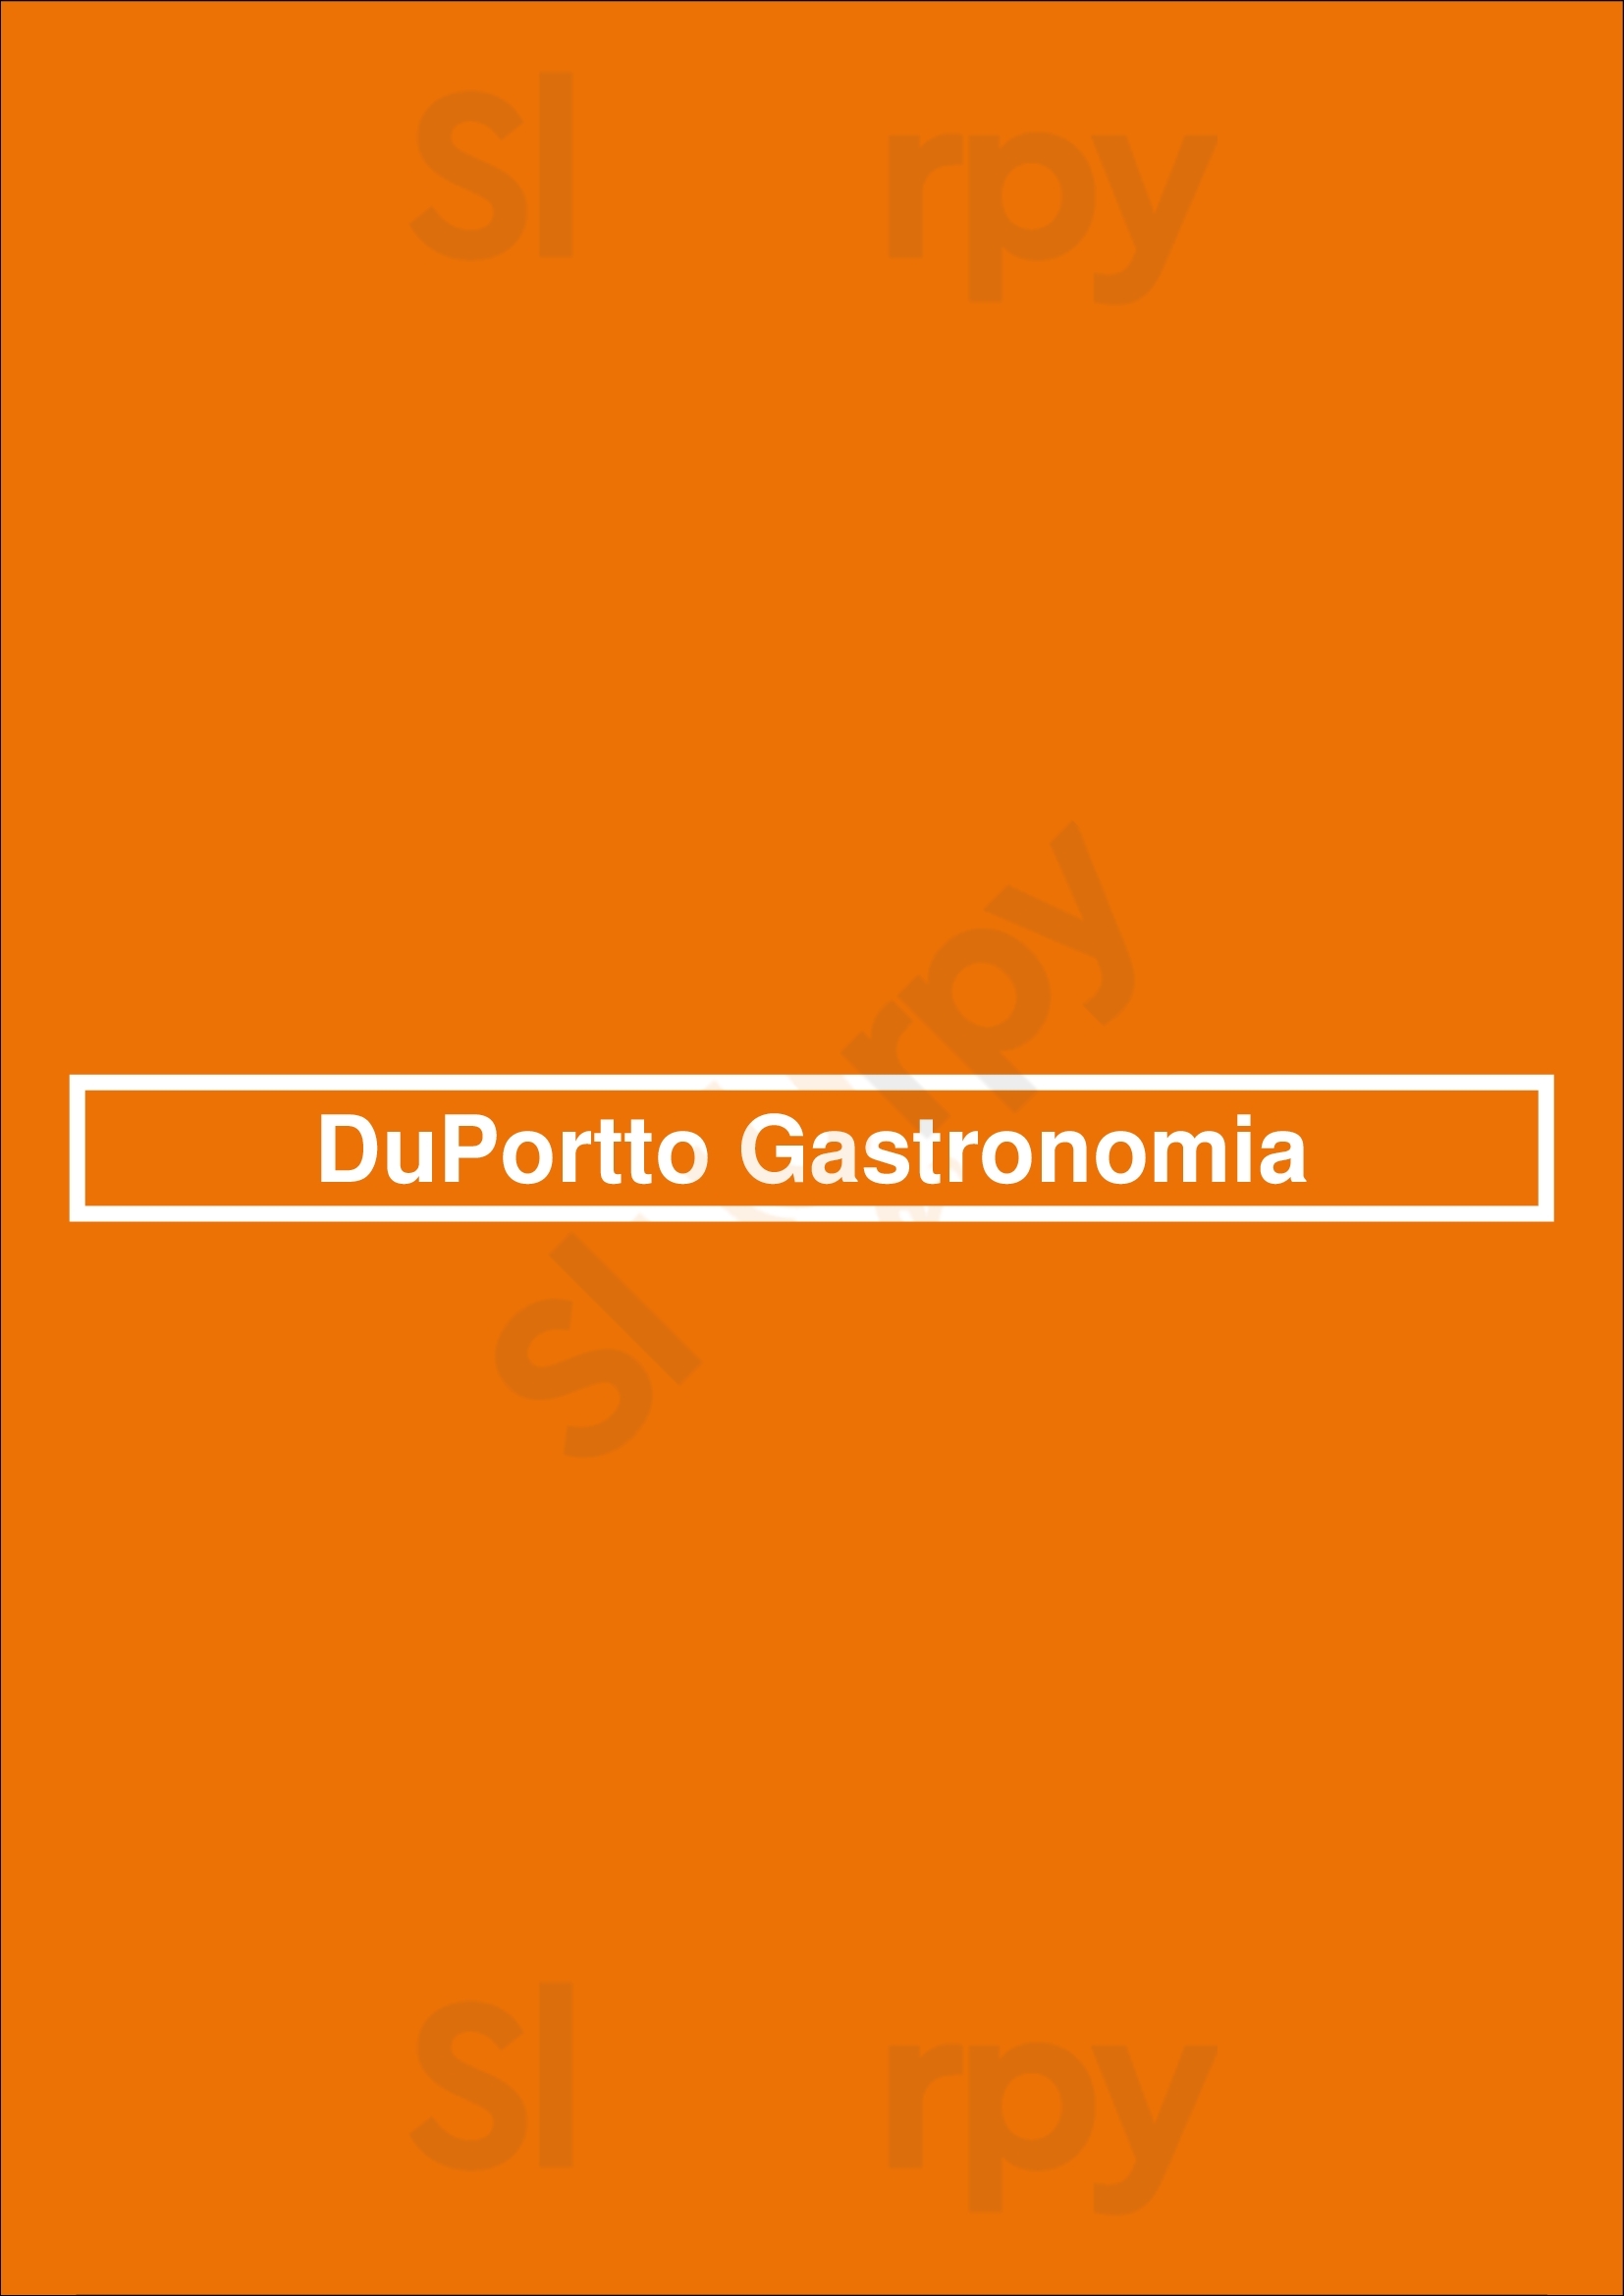 Duportto Gastronomia Porto Menu - 1